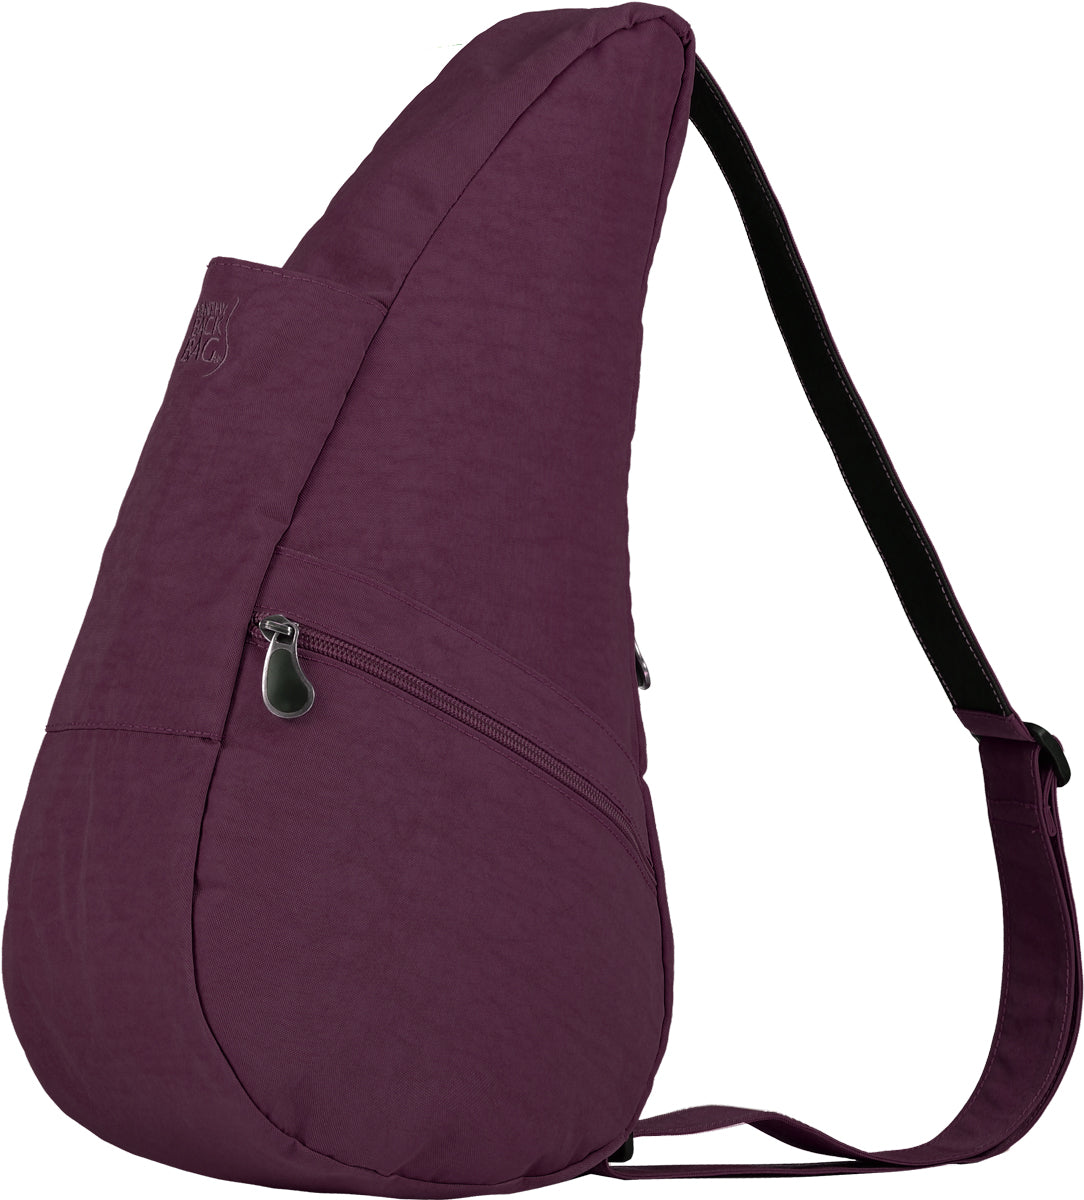 Ameribag Healthy Back Bag Tote Distressed Nylon Small Color: Sangria